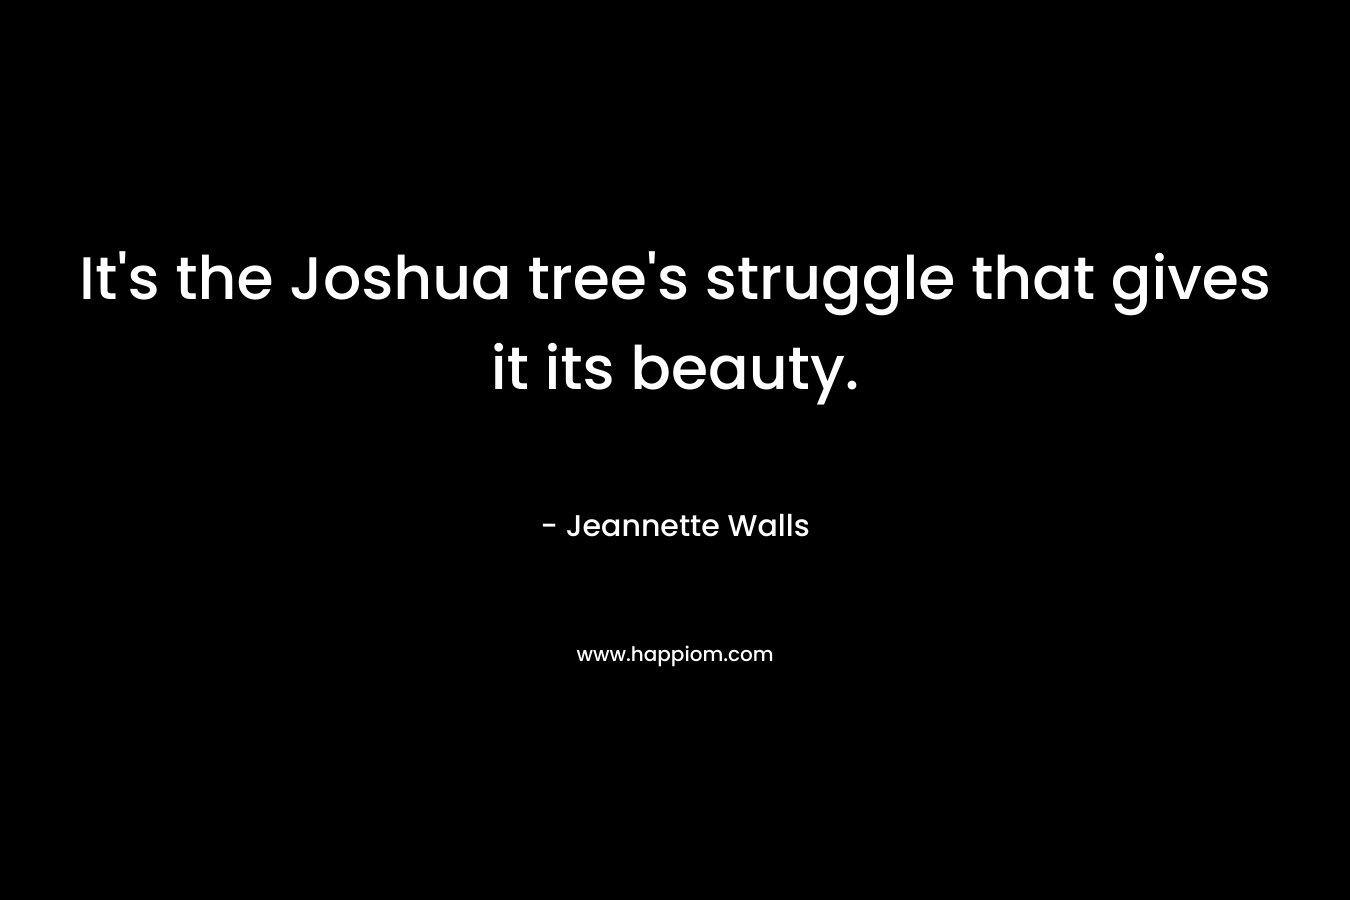 It's the Joshua tree's struggle that gives it its beauty.